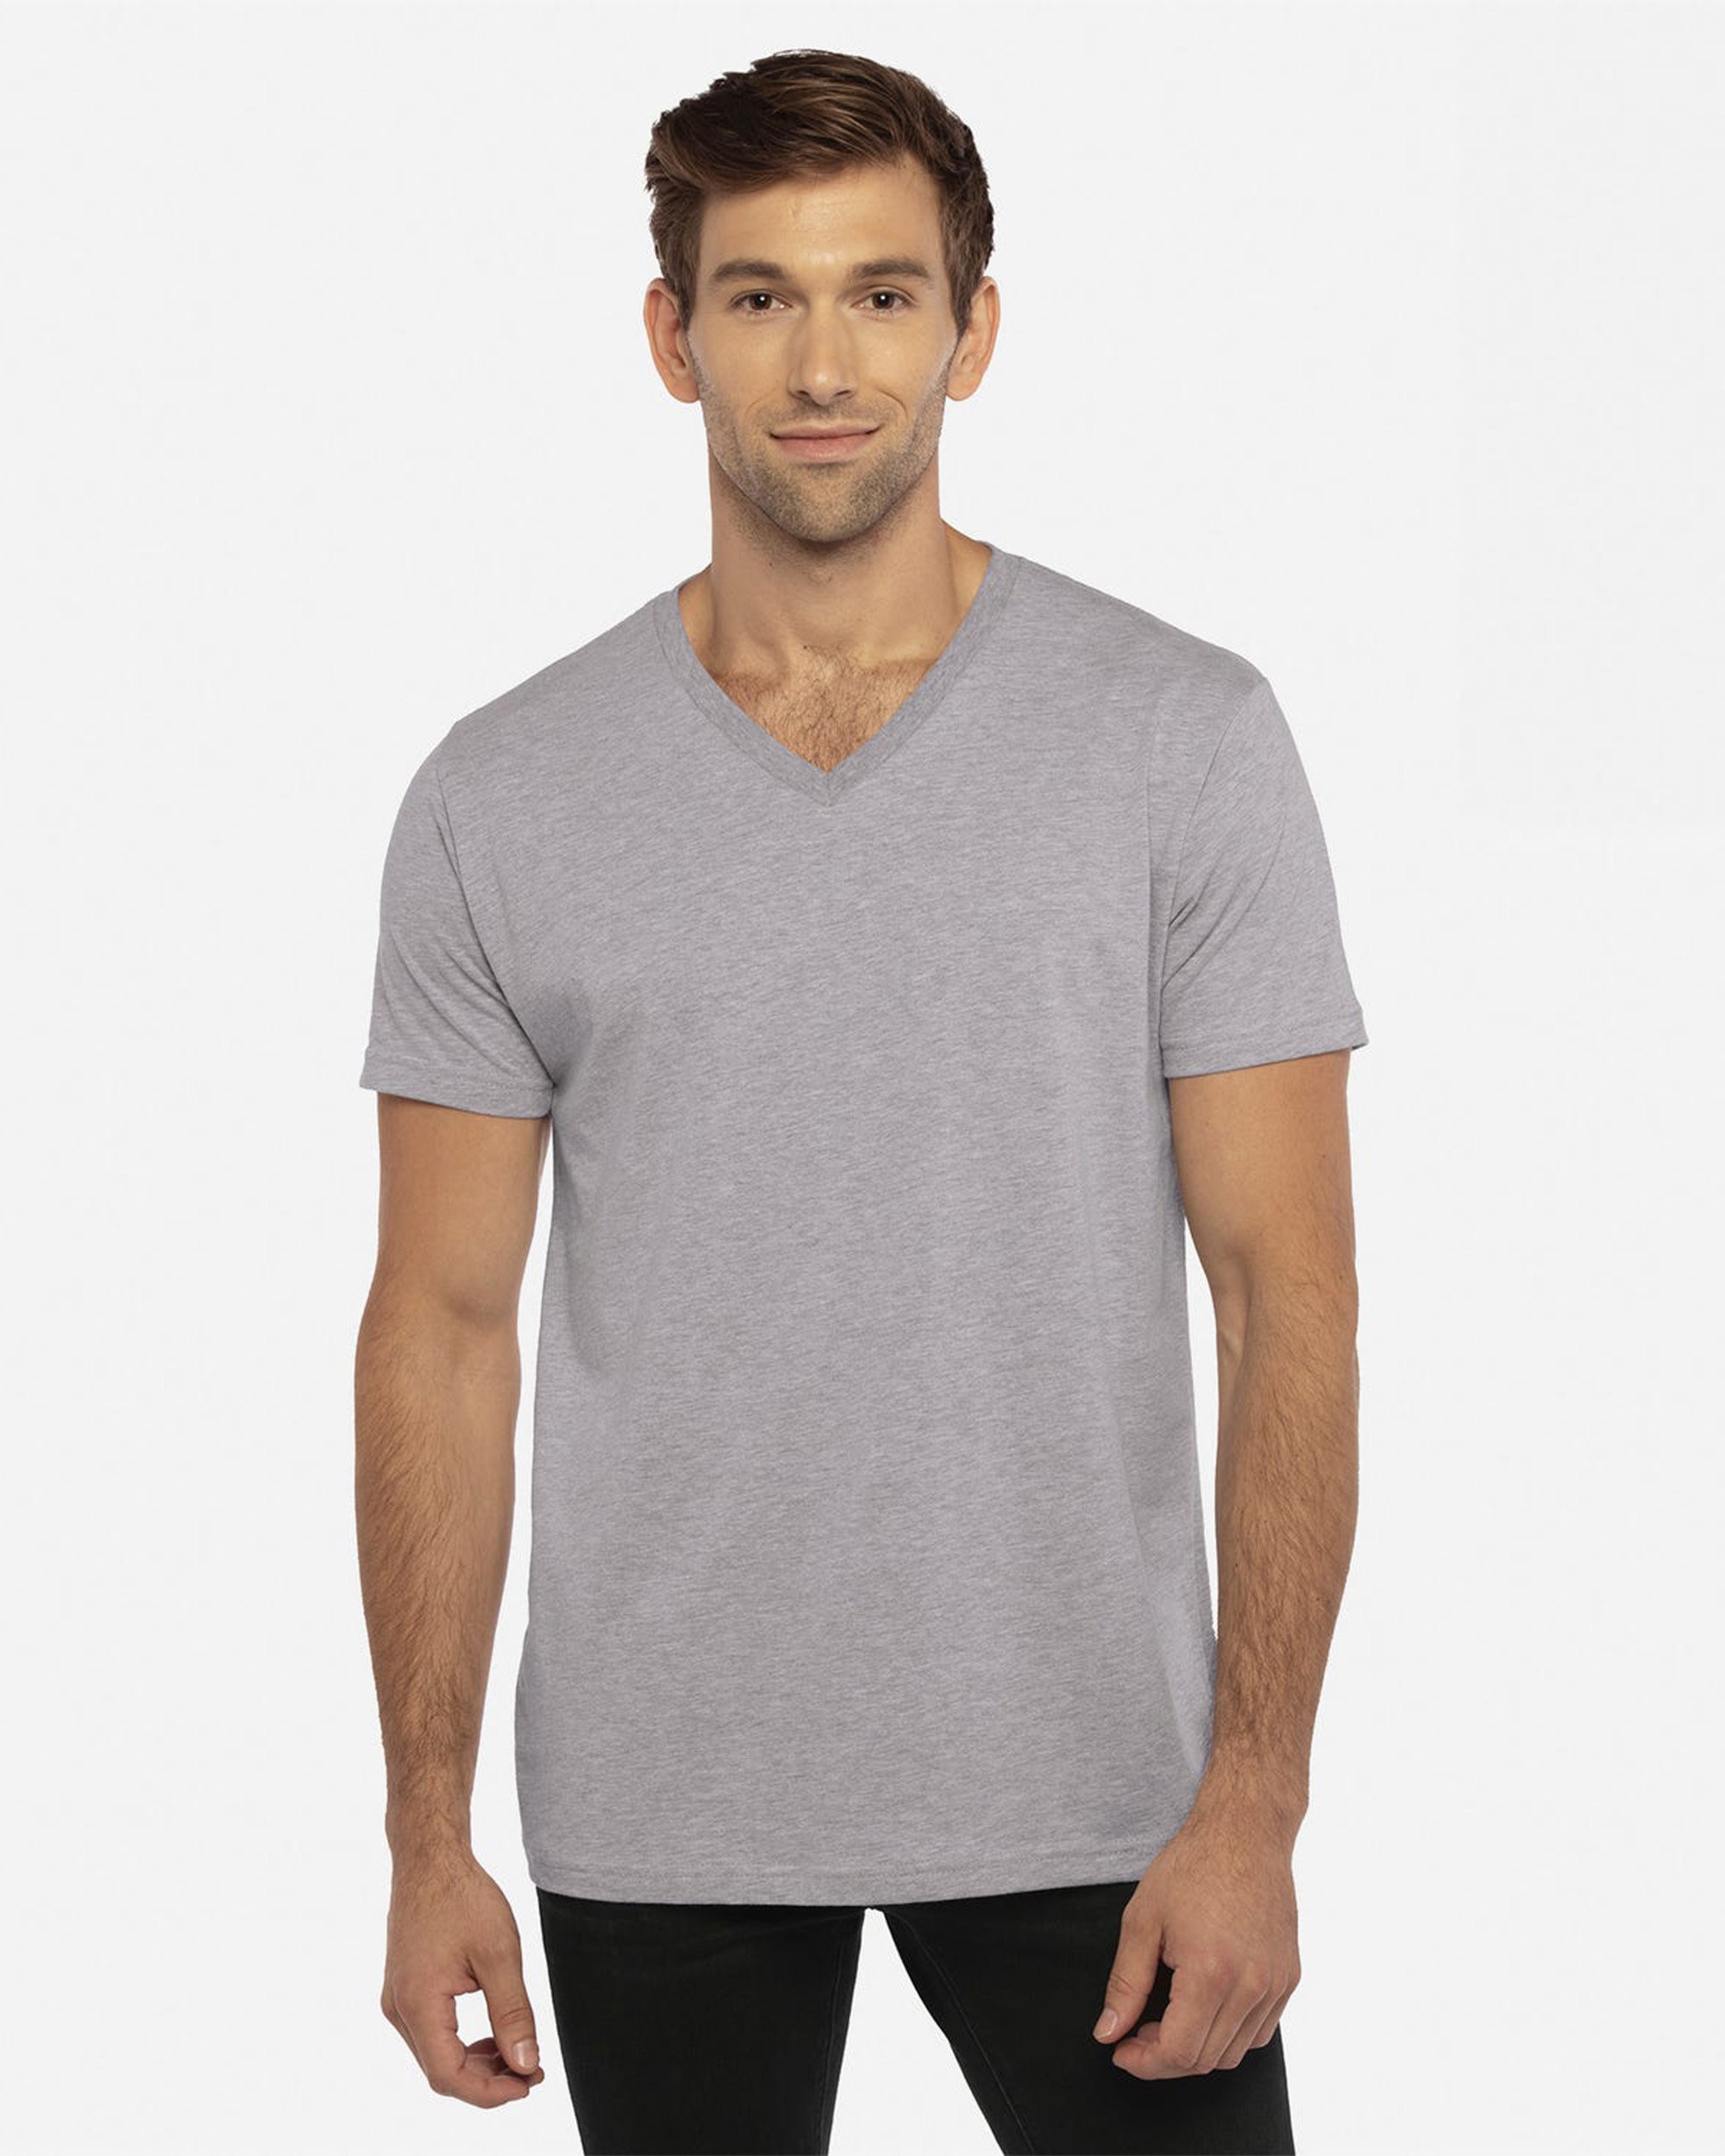 Next Level Apparel® 3200 Unisex Cotton V-Neck T-Shirt